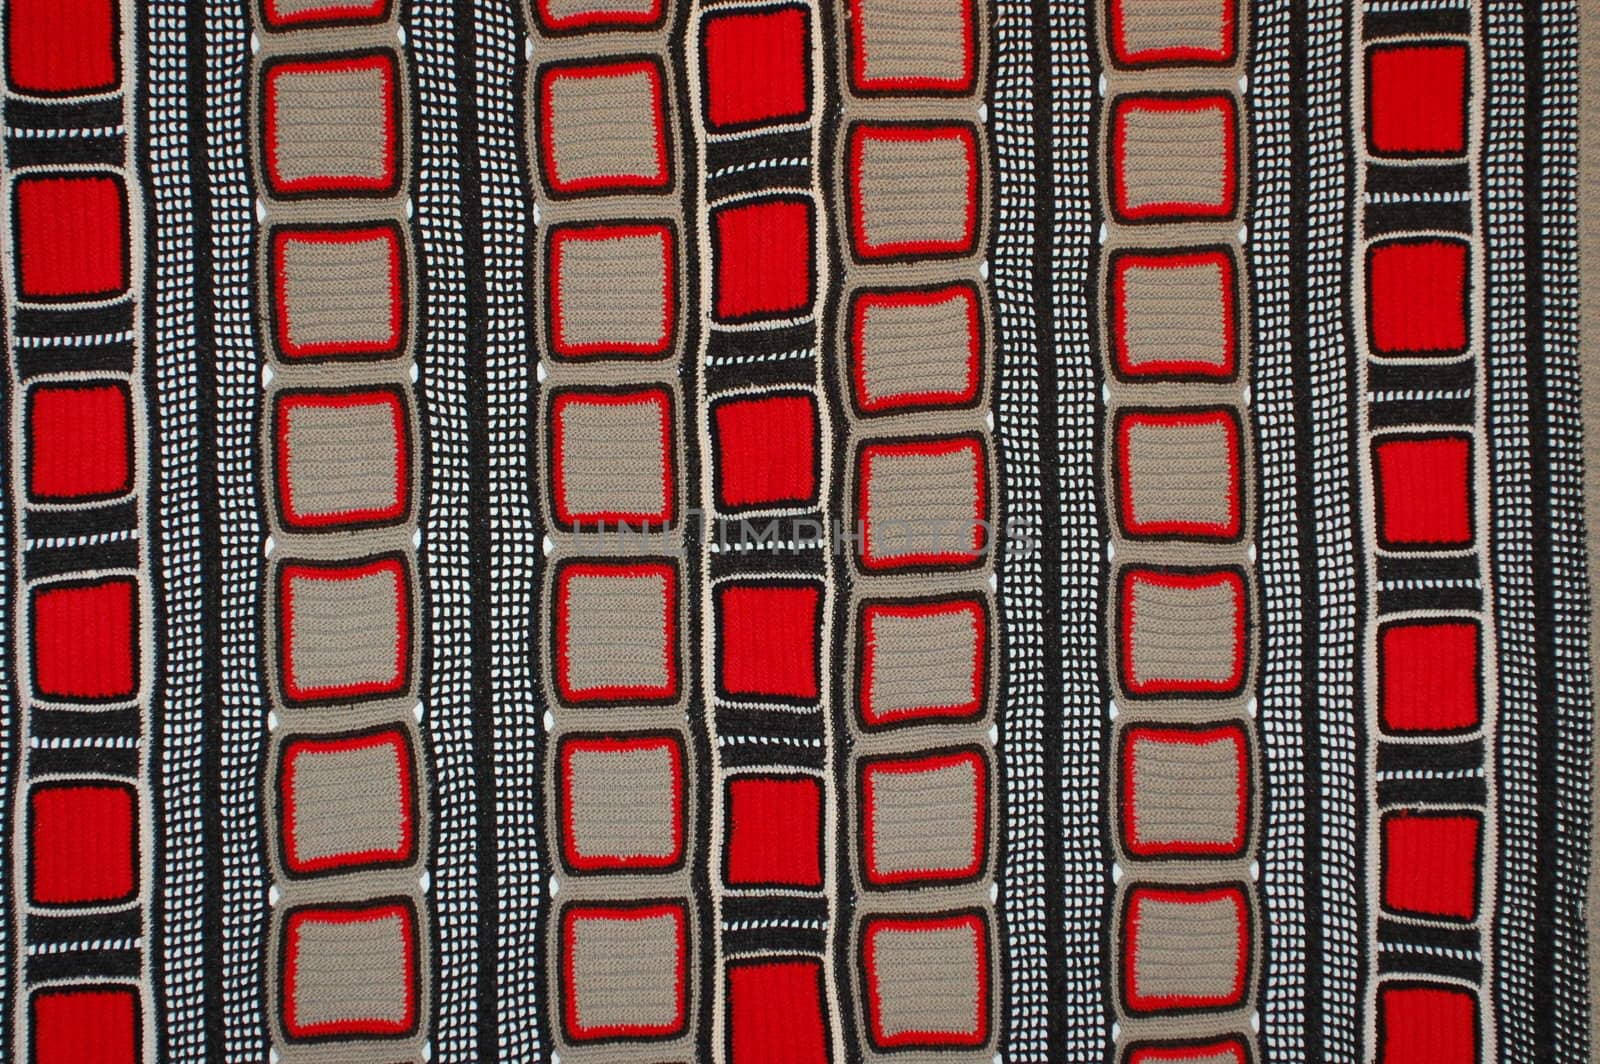 Tiled hand work textured textile